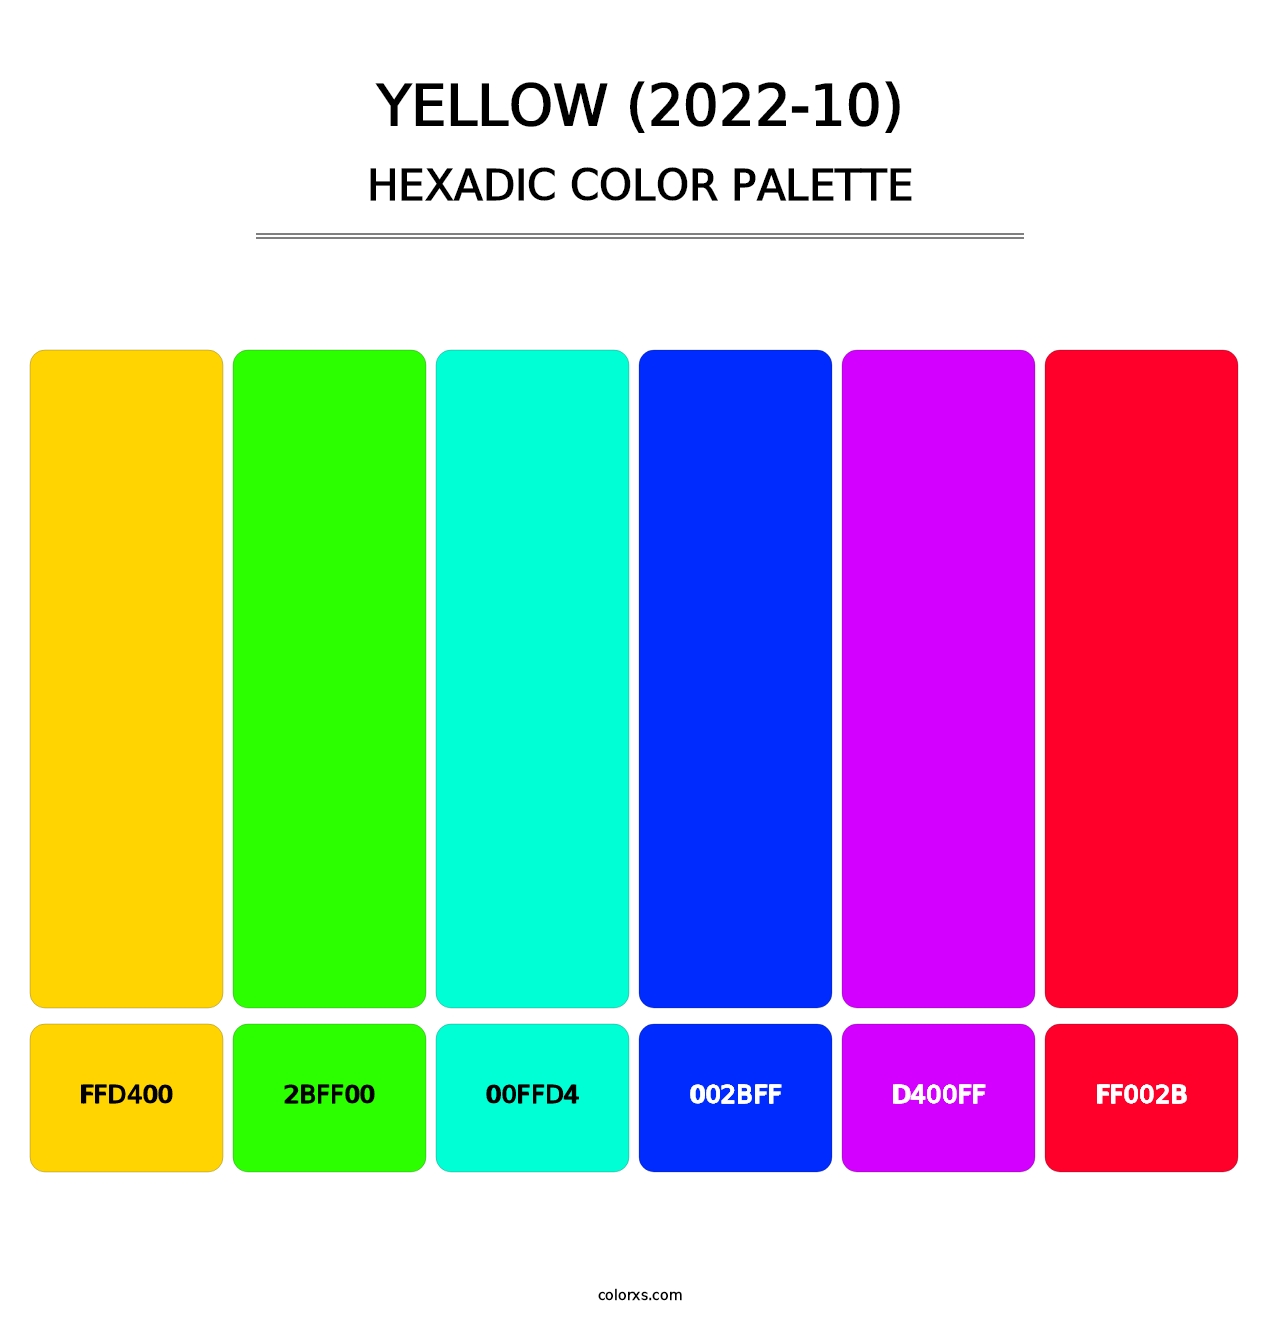 Yellow (2022-10) - Hexadic Color Palette